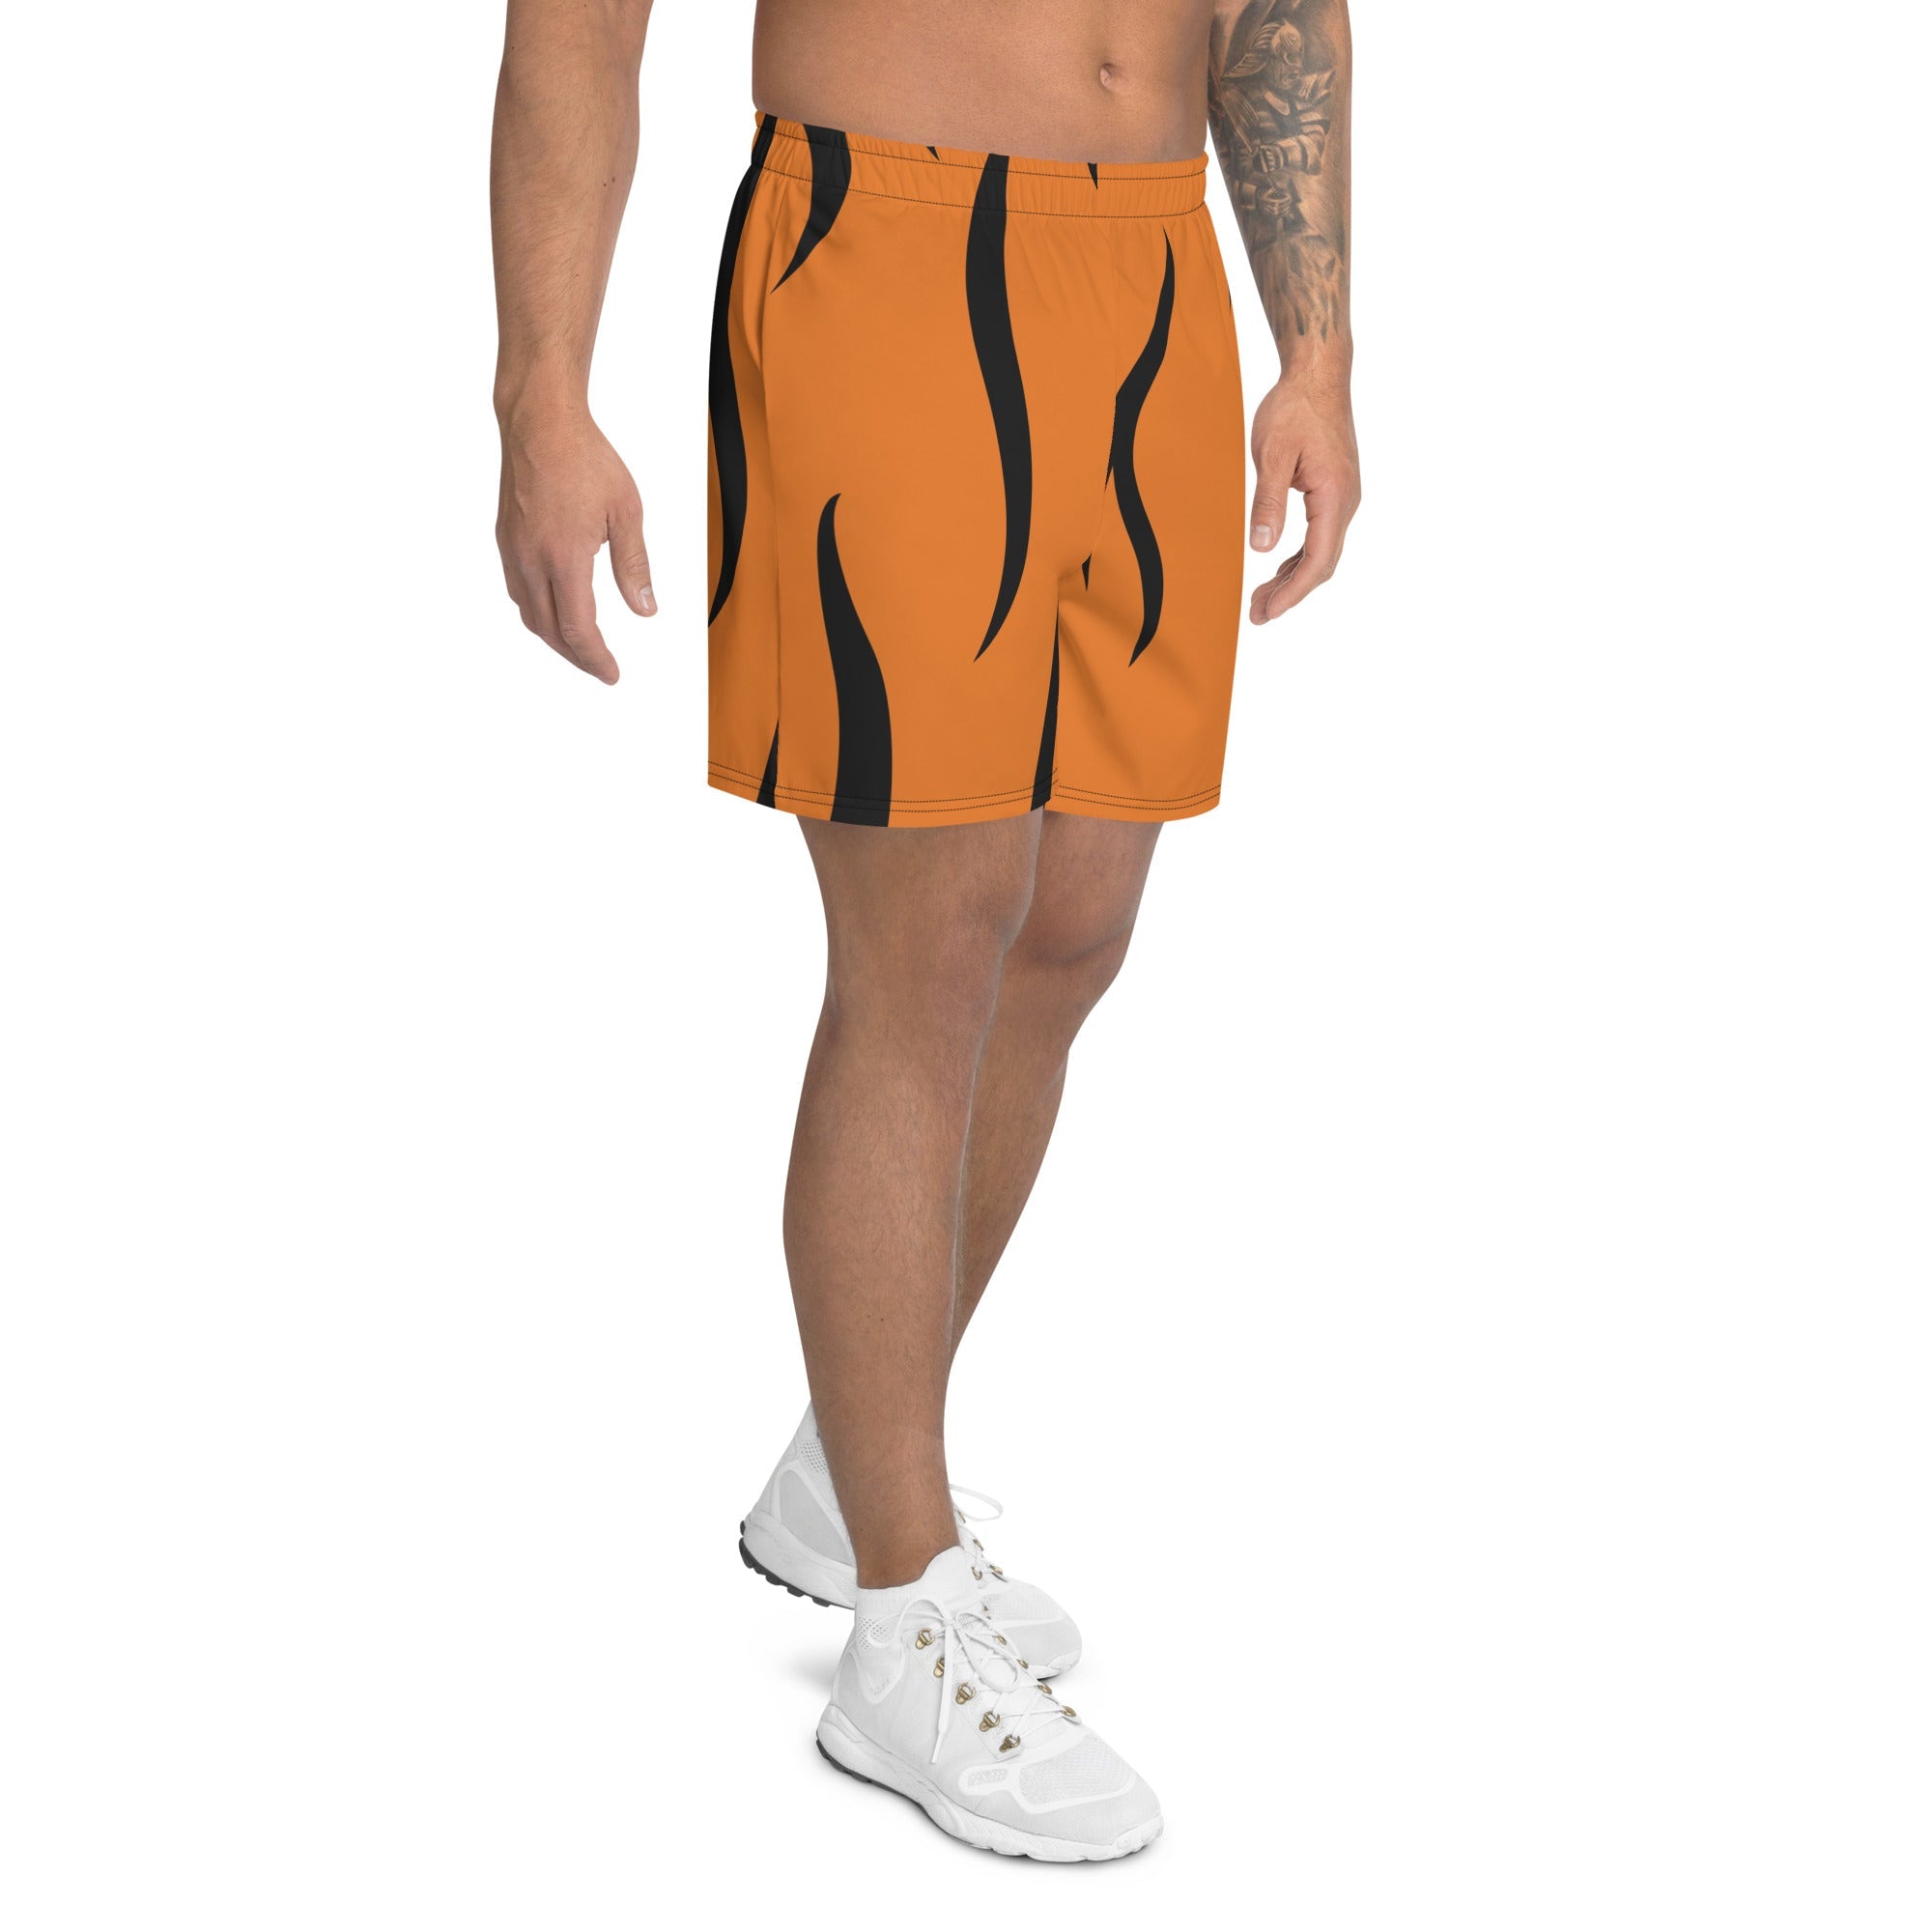 Tiger Striped Wrestling Shorts Iron Fist Wrestling Wrestling Shorts